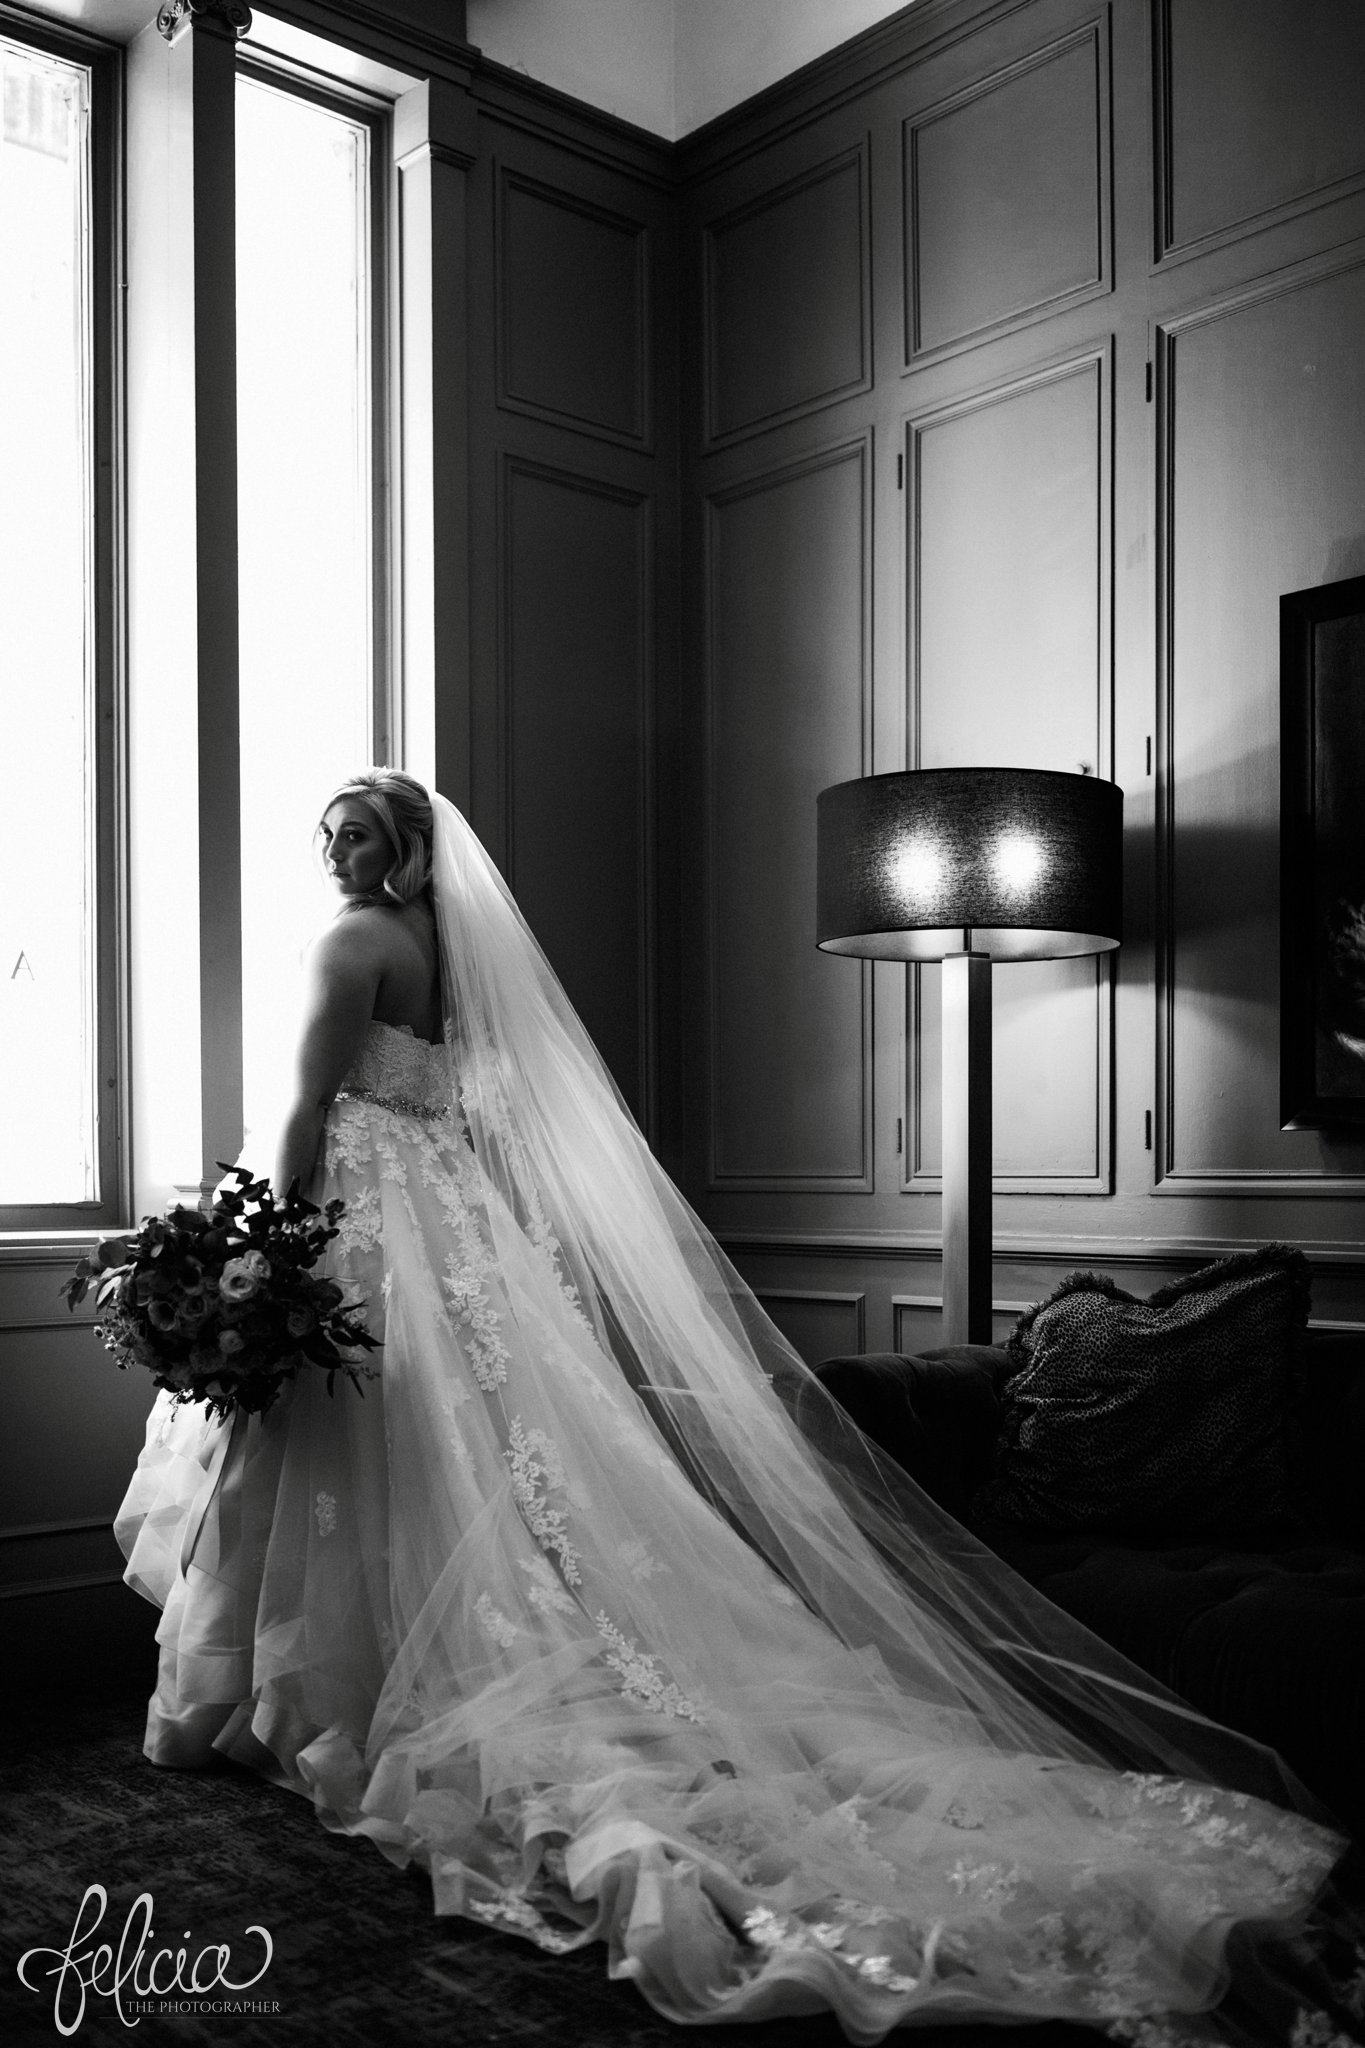 images by feliciathephotographer.com | wedding photographer | downtown kansas city | bridal portrait | long lace train | wild hill flowers | black and white | hotel ambassador | glamorous | belle vogue | 